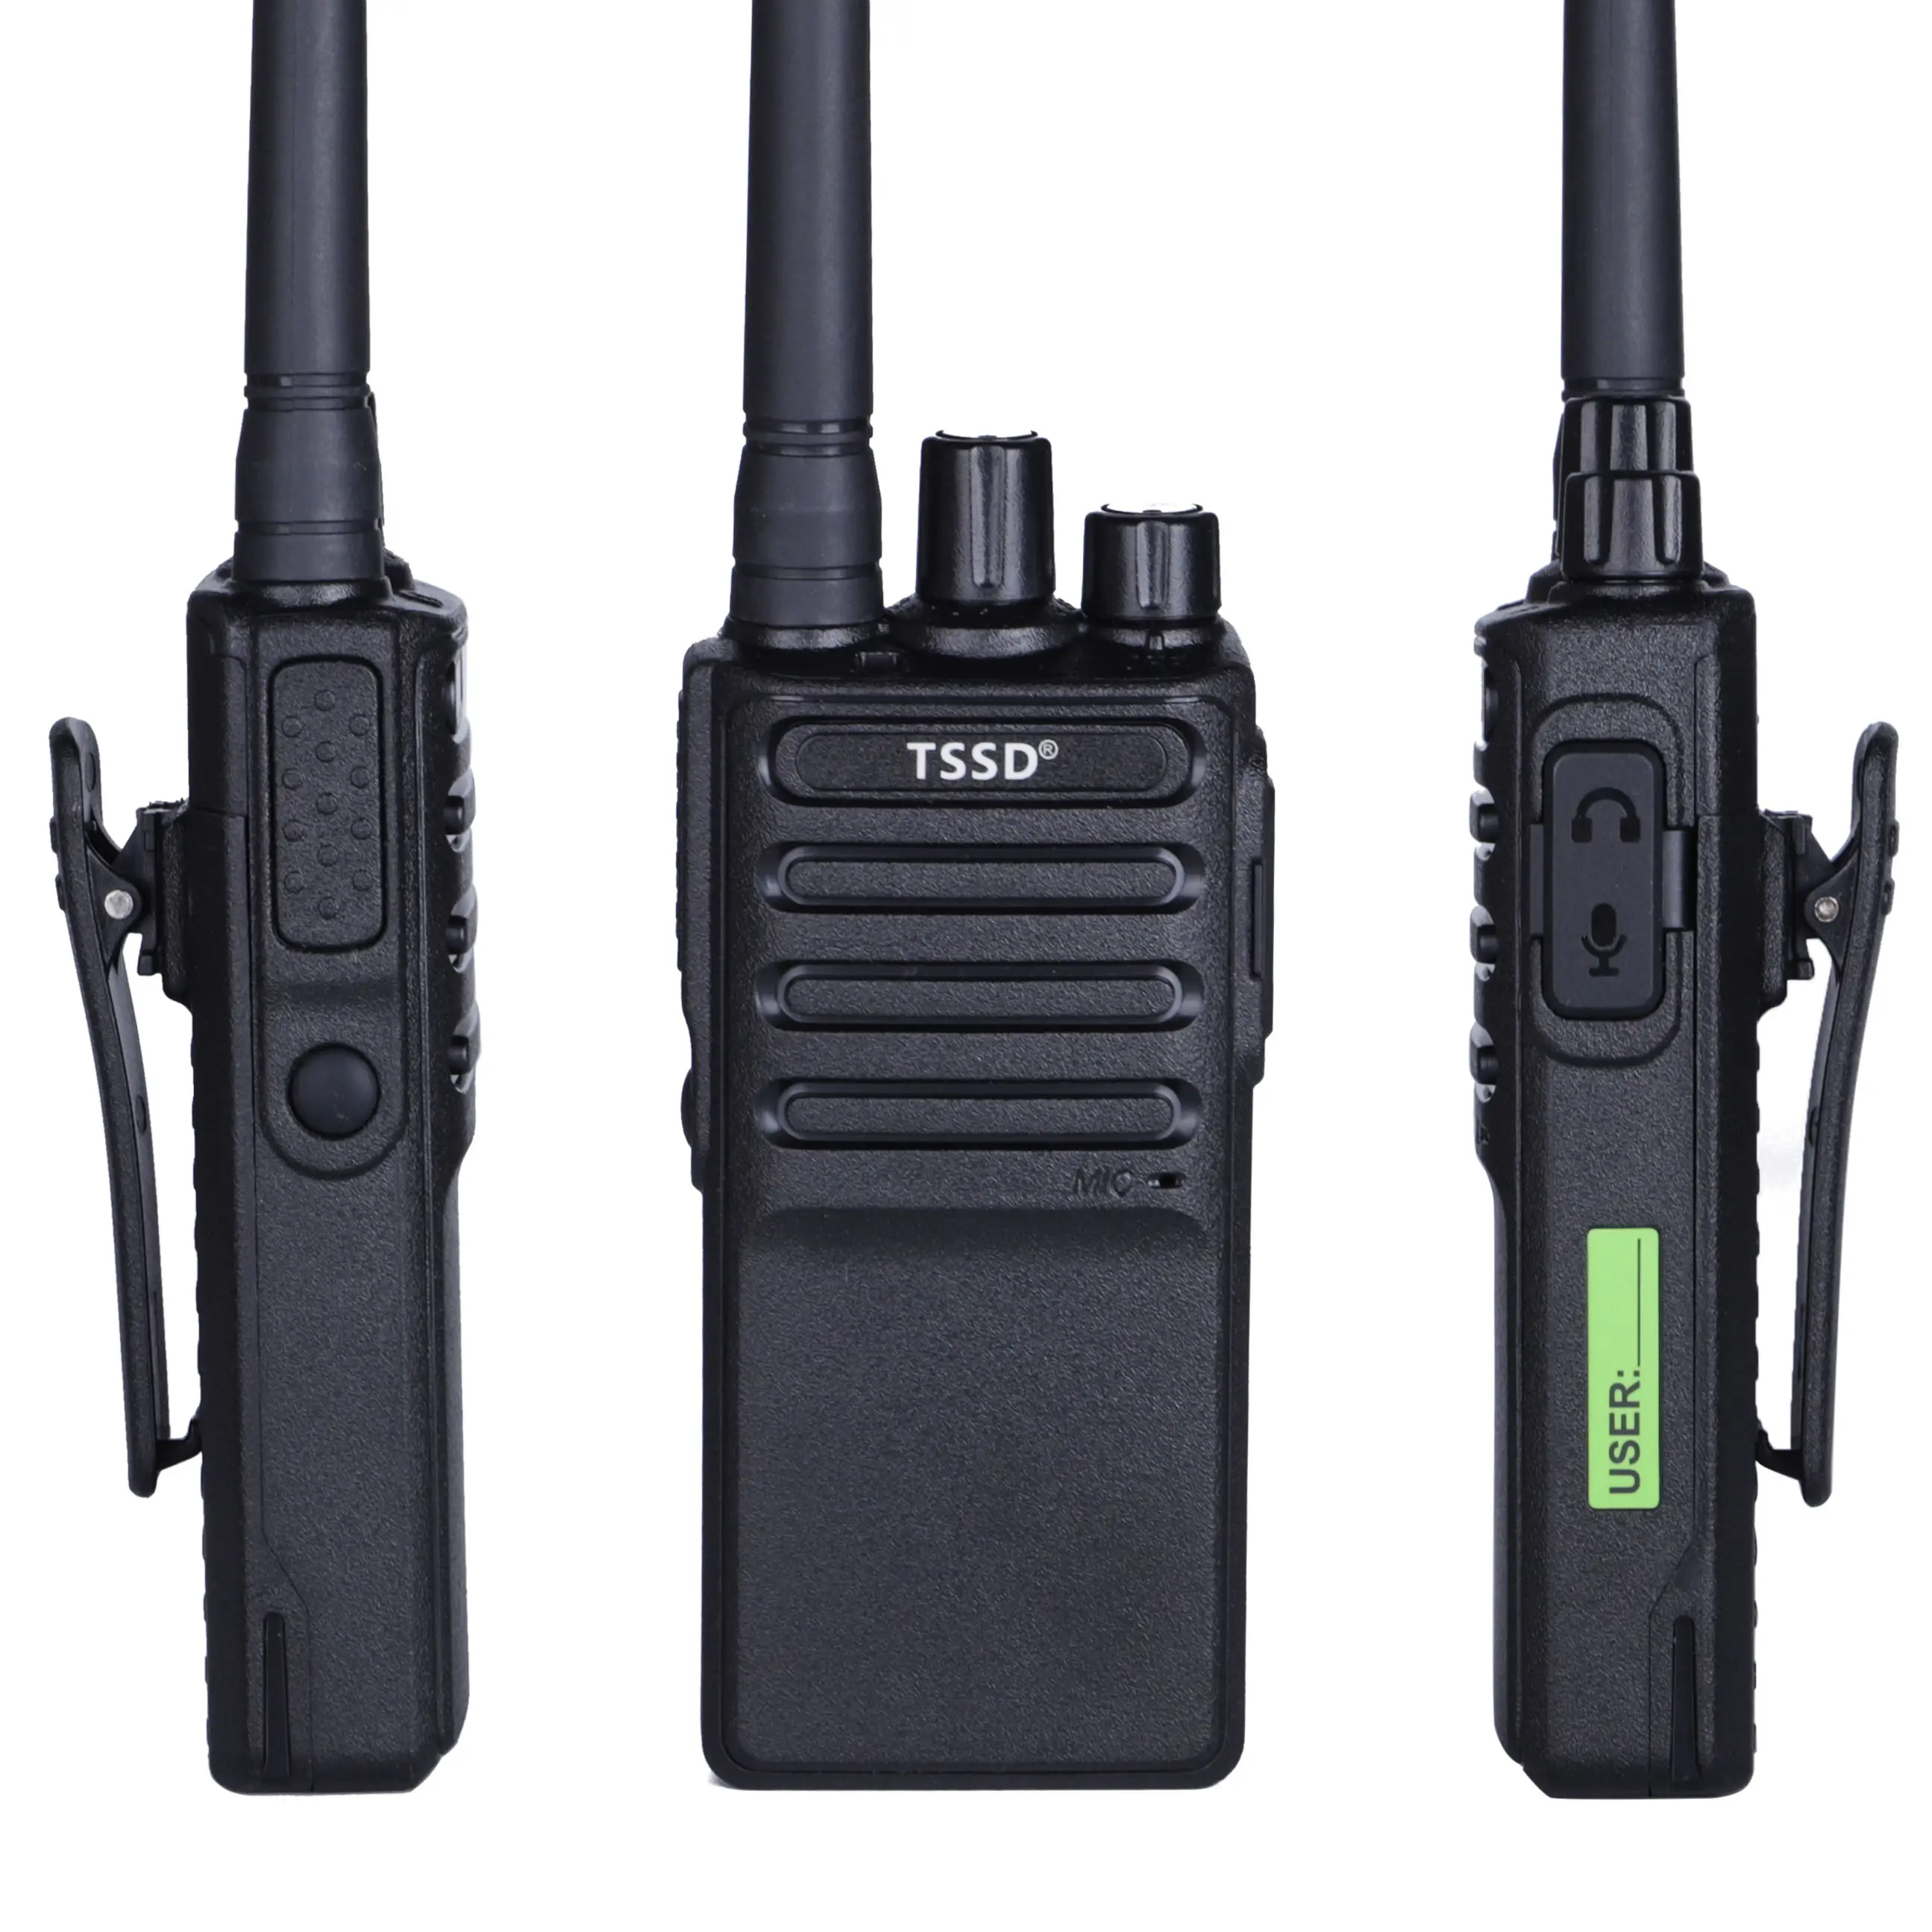 tssd TS-K68 New arrival UHF MINI intercom two way Poc mini handy Radios rechargeable kids mobile phone outdoor portable radio